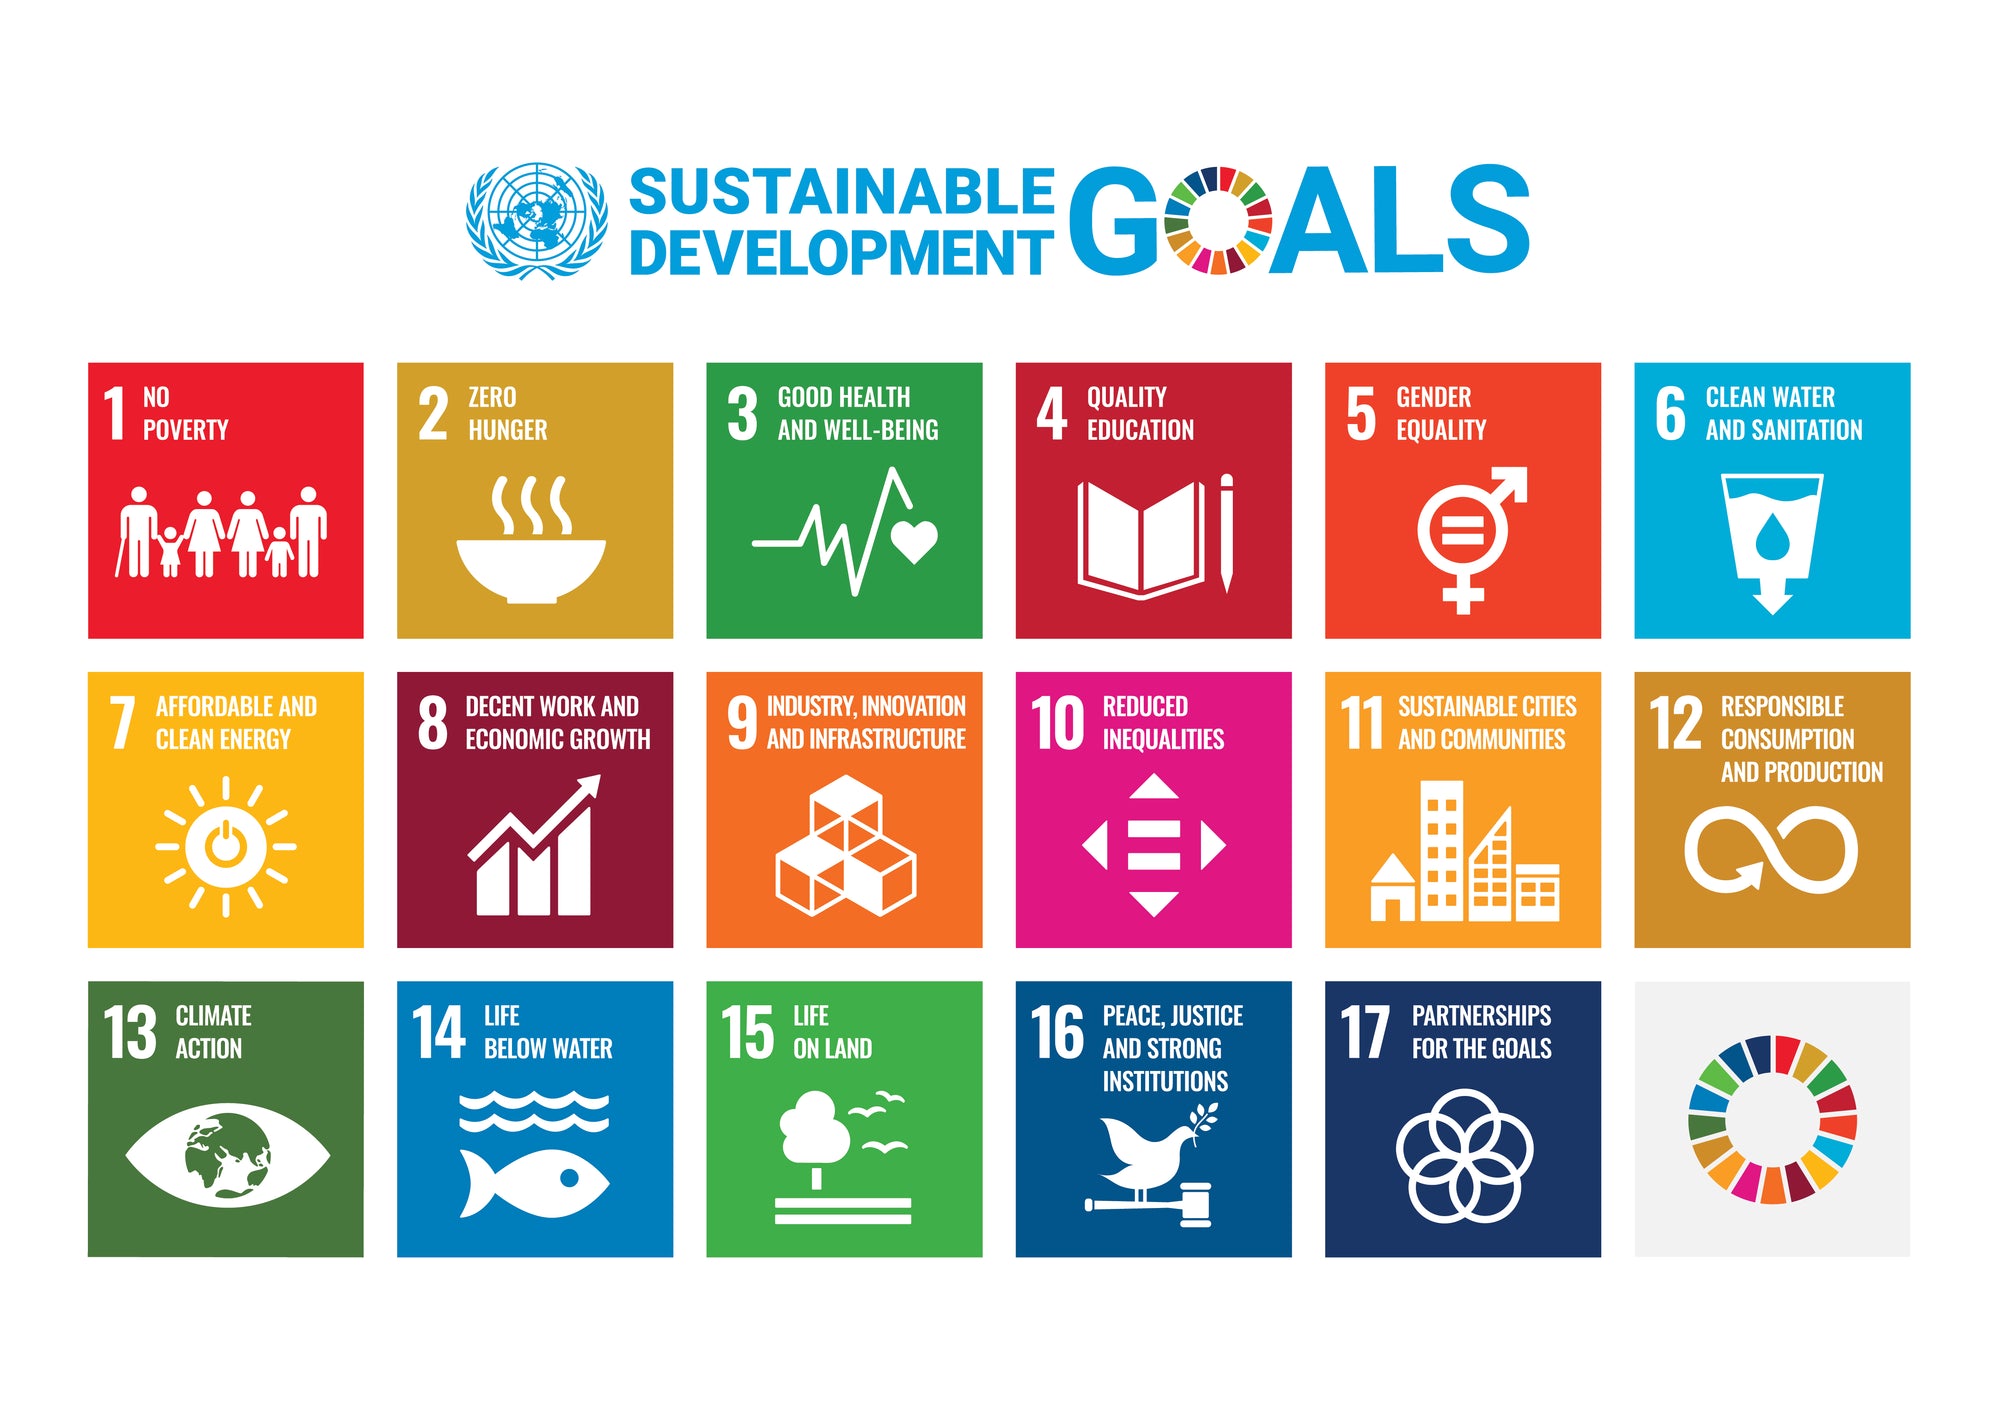 Our Sustainable Development Goals (SDGs)